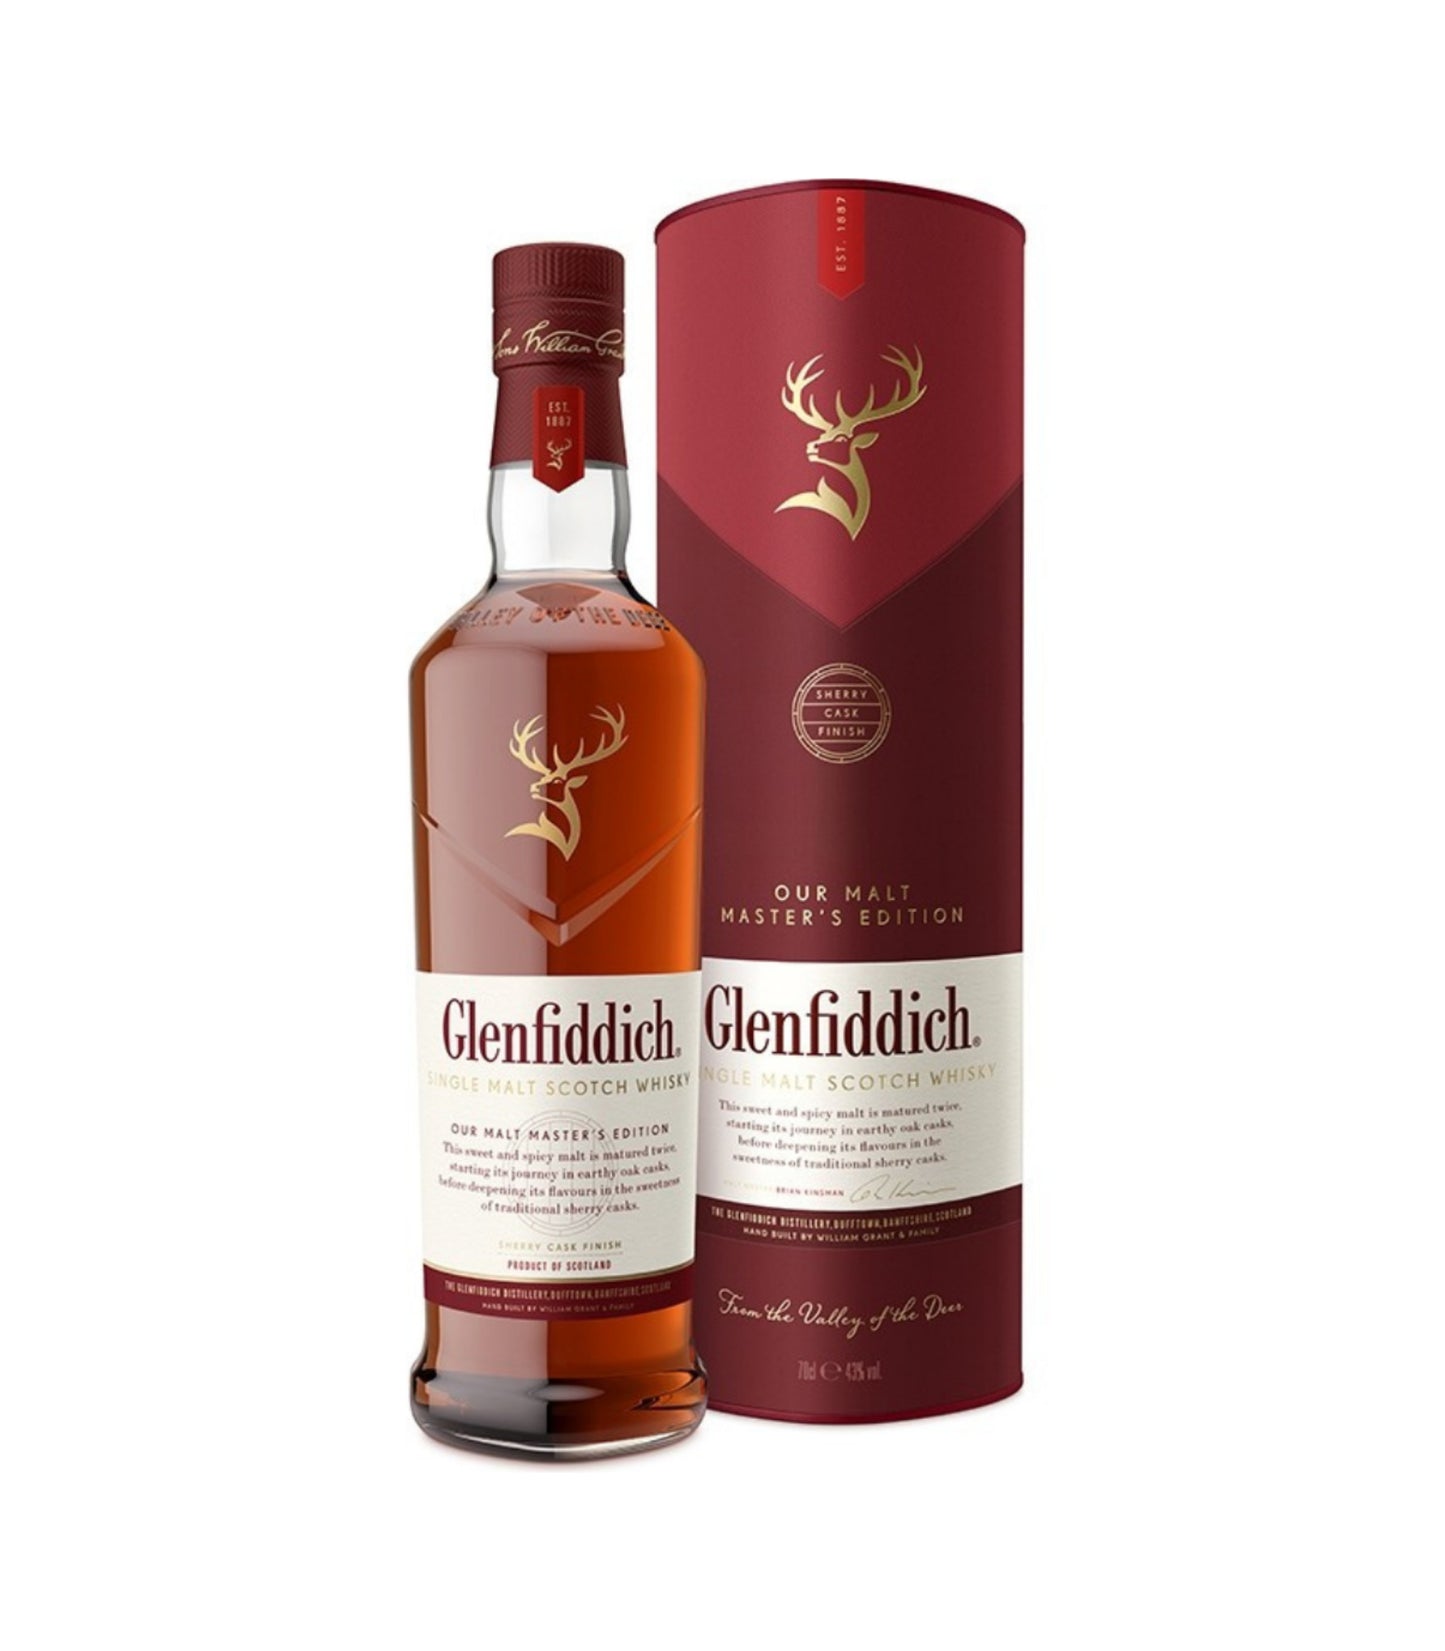 Glenfiddich Malt Master's Edition - Sherry Cask Finish Whisky (70cl, 43%)